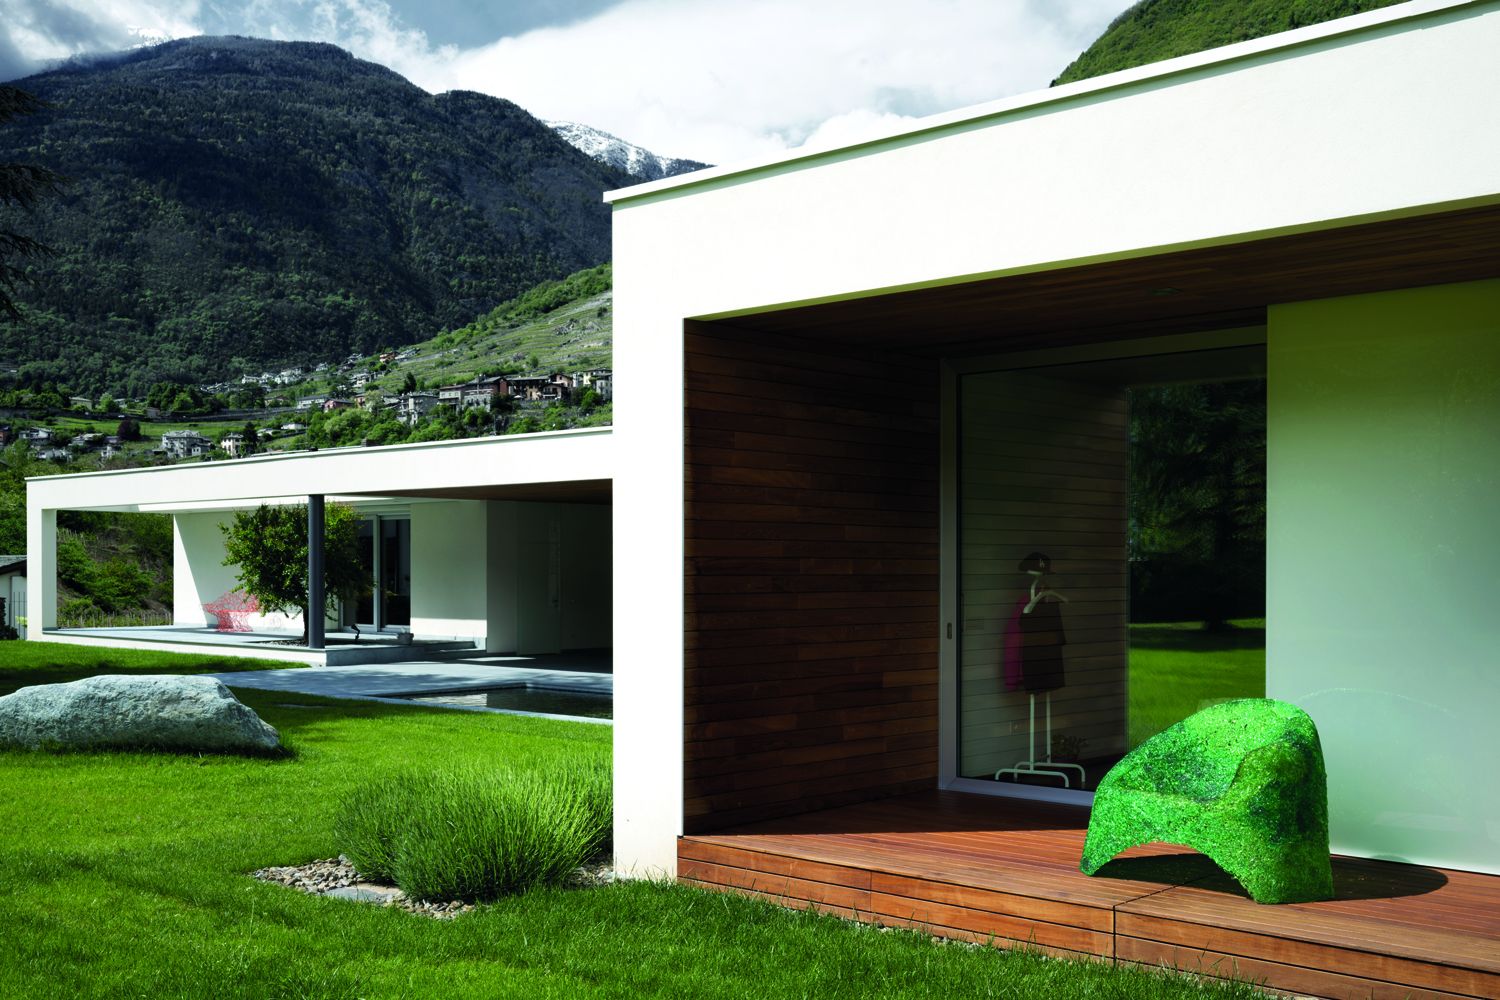 Villa Geef evokes harmony with Italy’s Rhaetian Alps